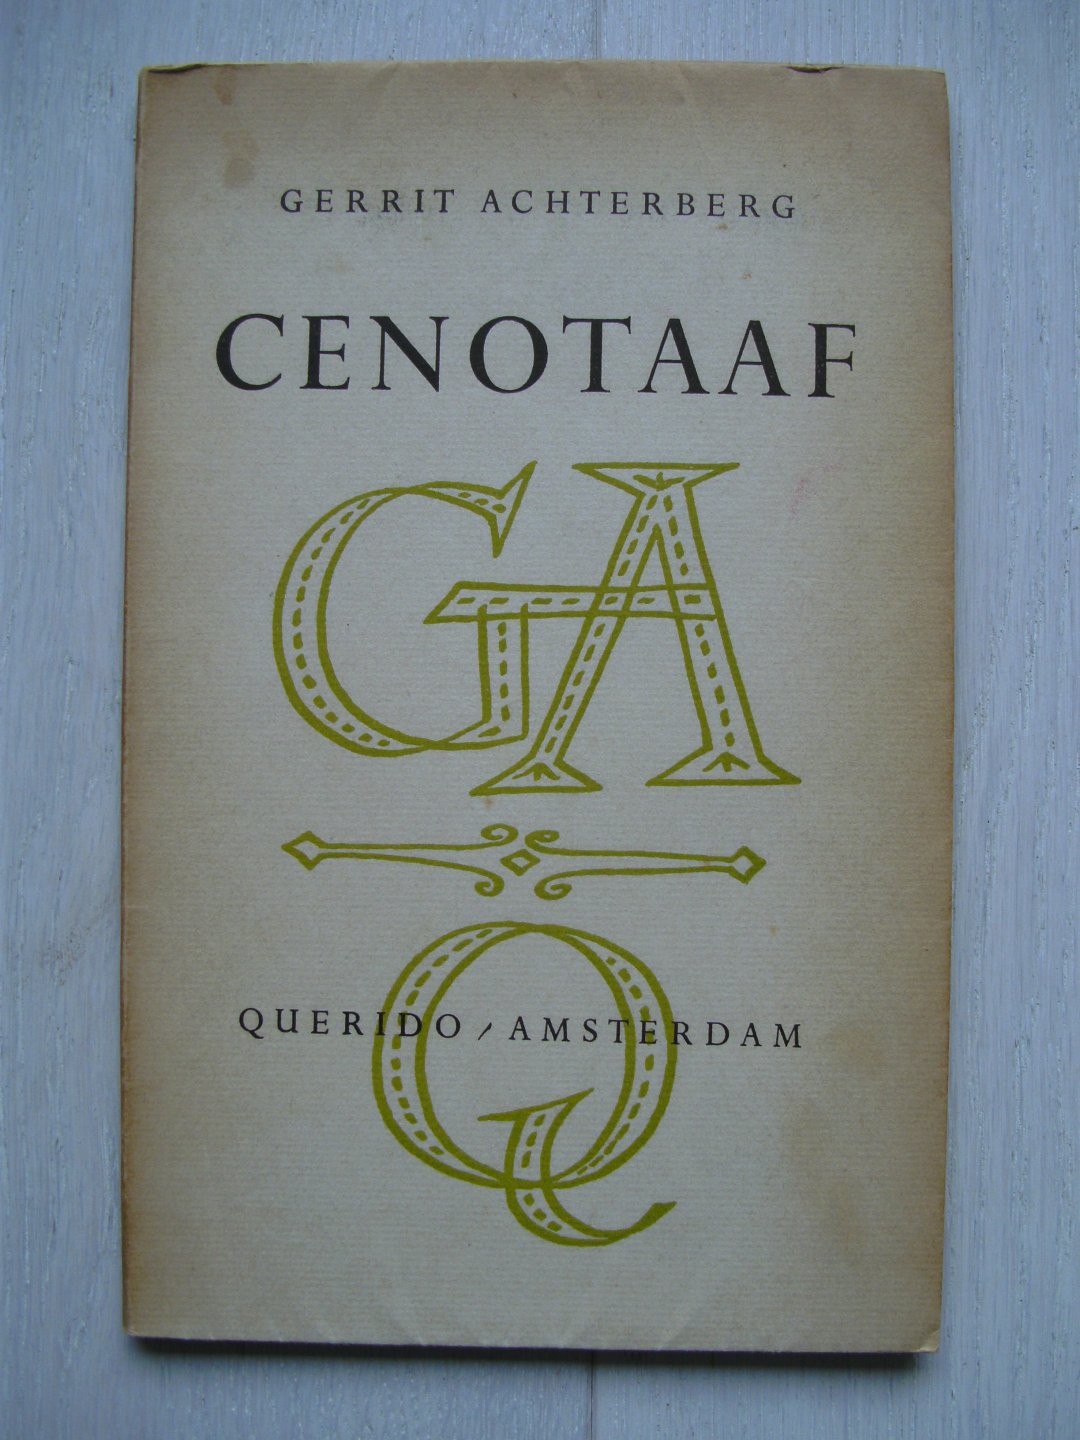 Achterberg, Gerrit - Cenotaaf